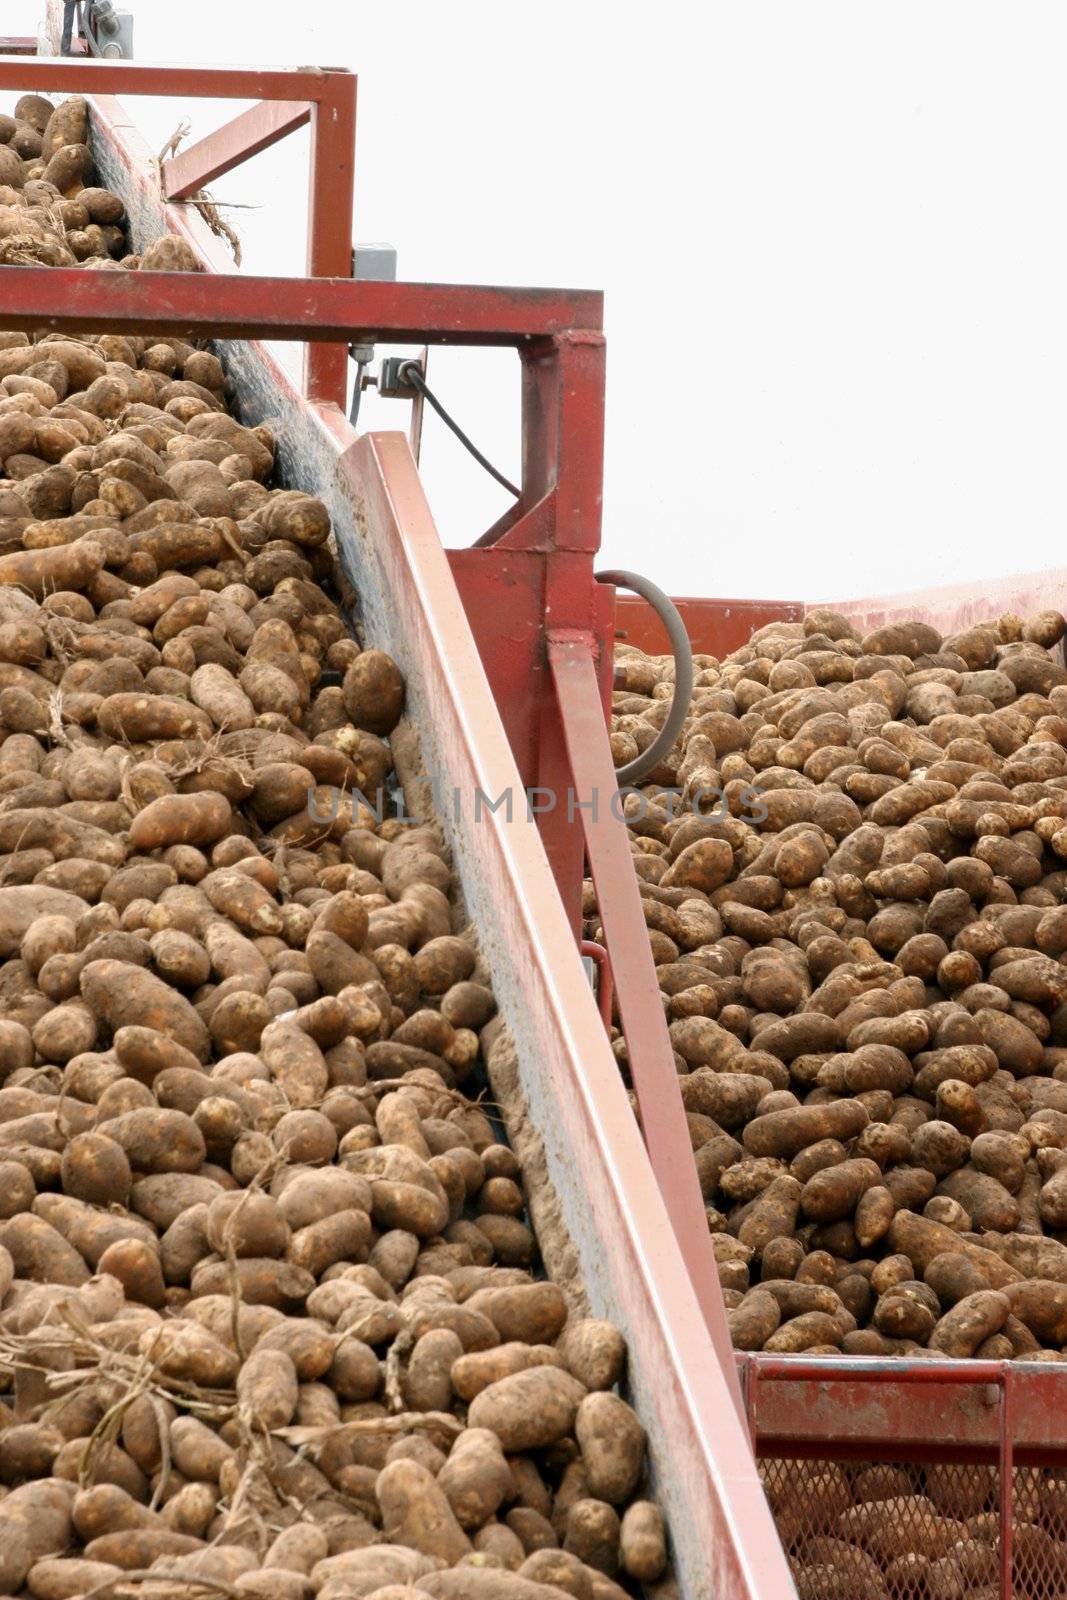 Harvested potatoes on a Conveyor by jonalynnhansen